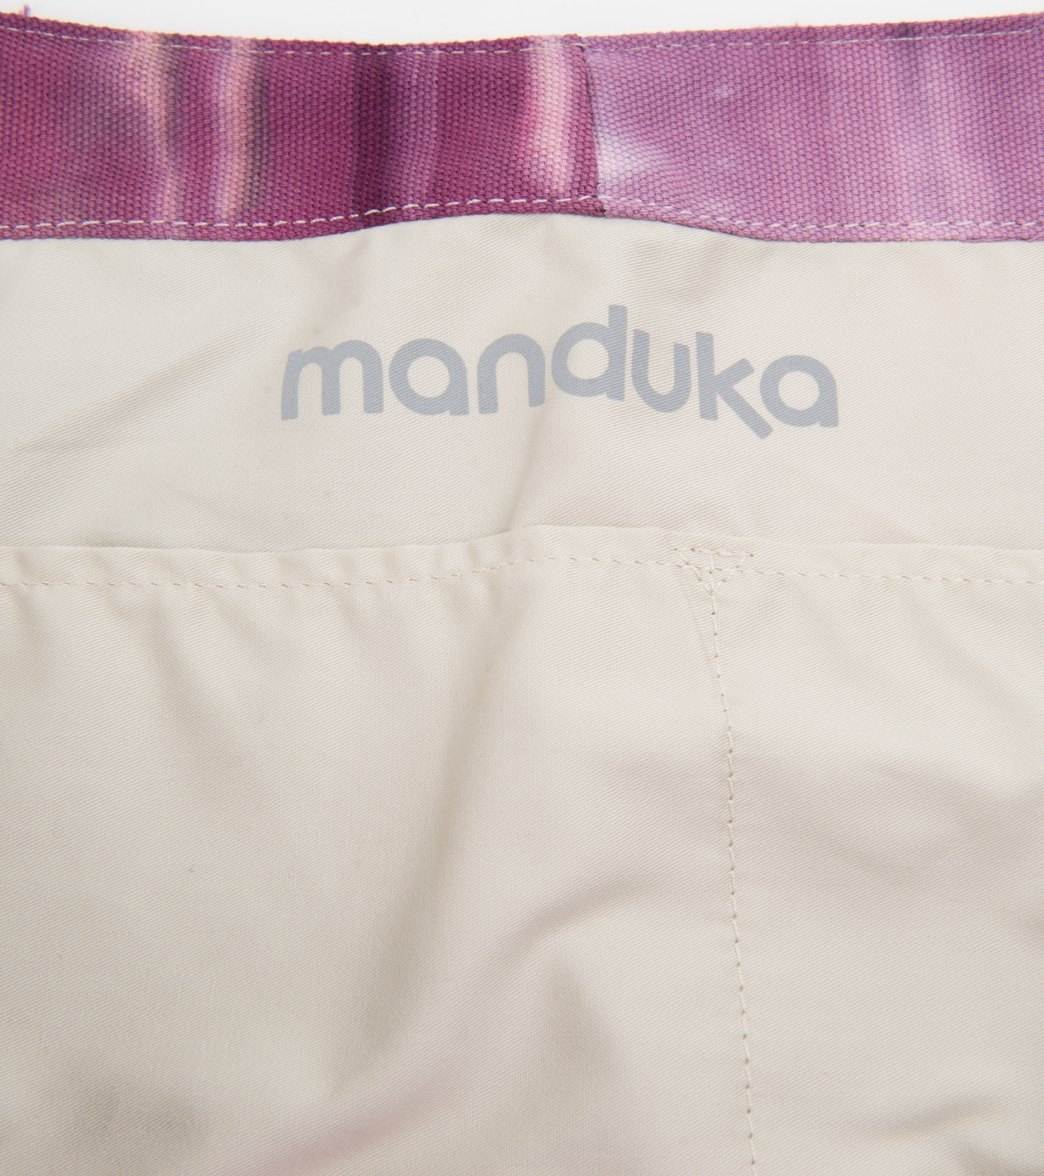 Manduka The Freeform Yoga Mat Bag